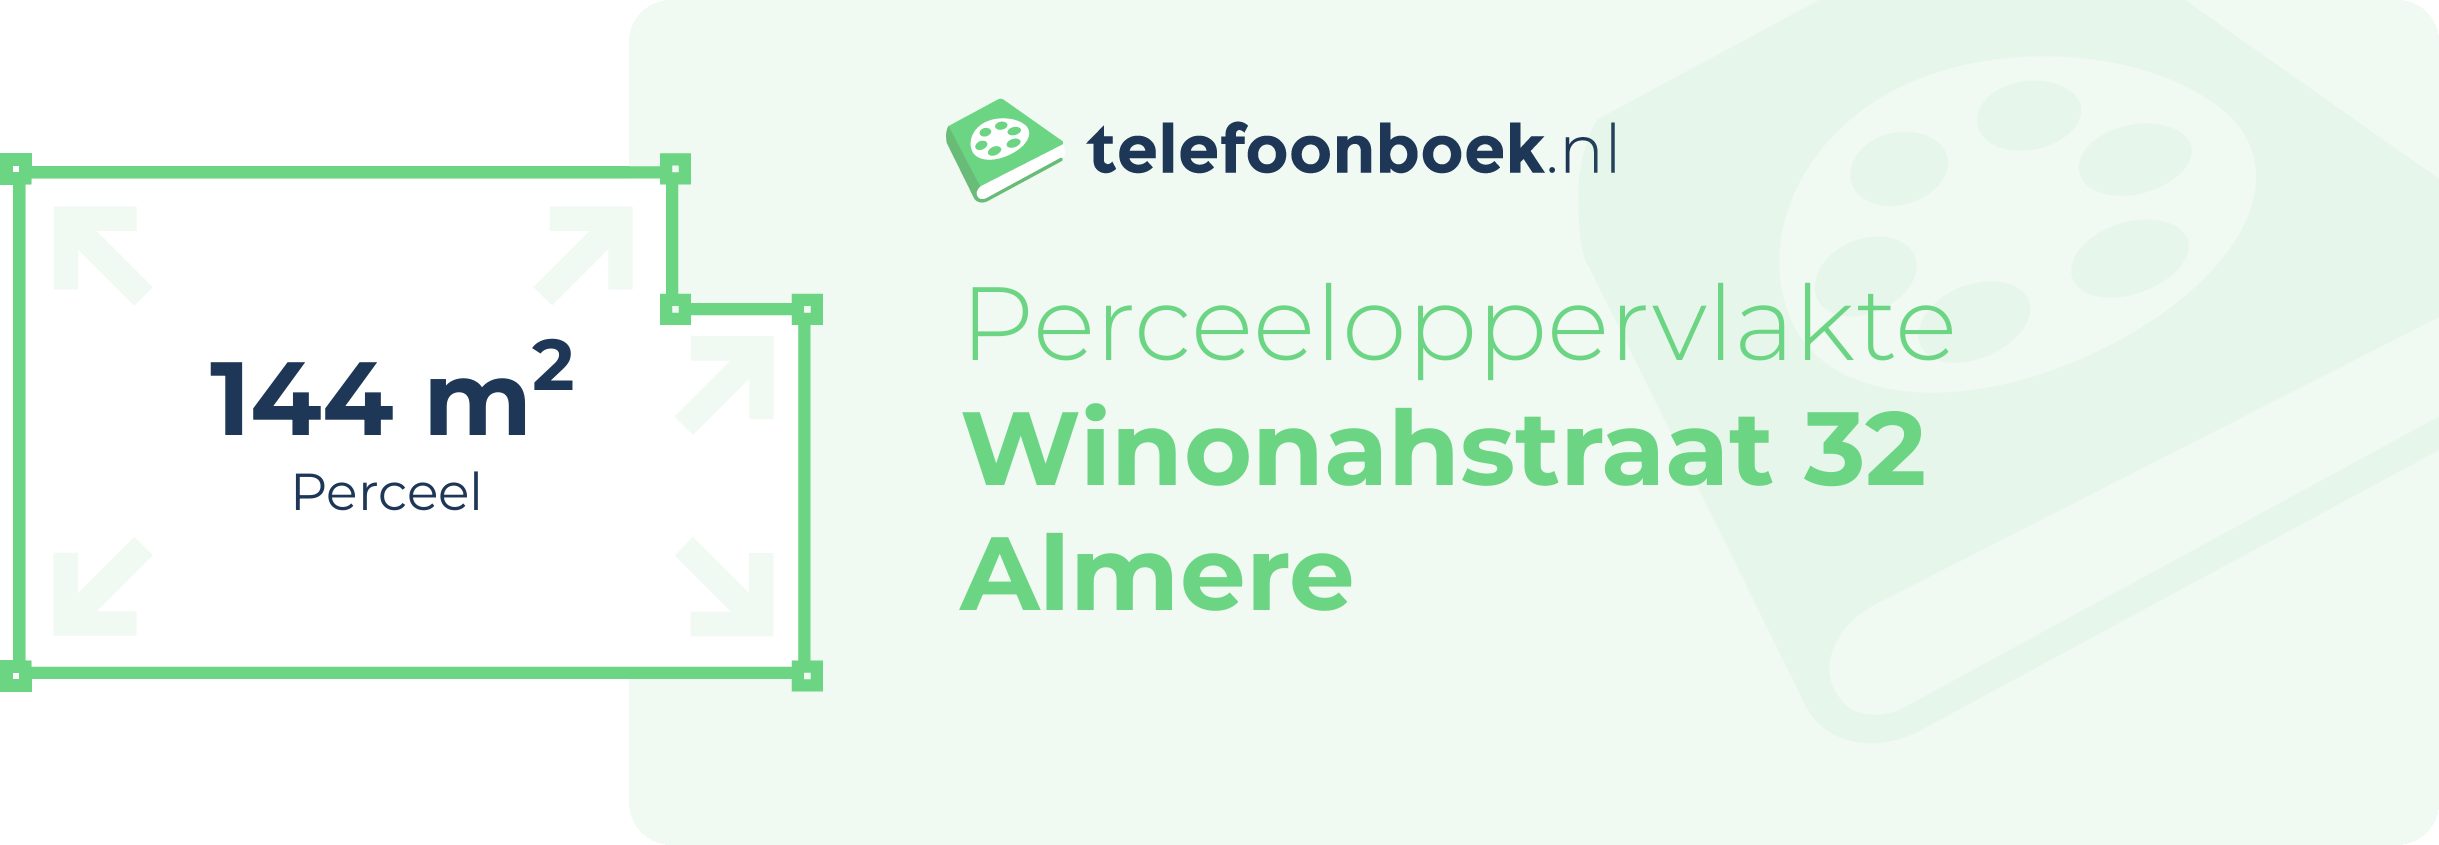 Perceeloppervlakte Winonahstraat 32 Almere